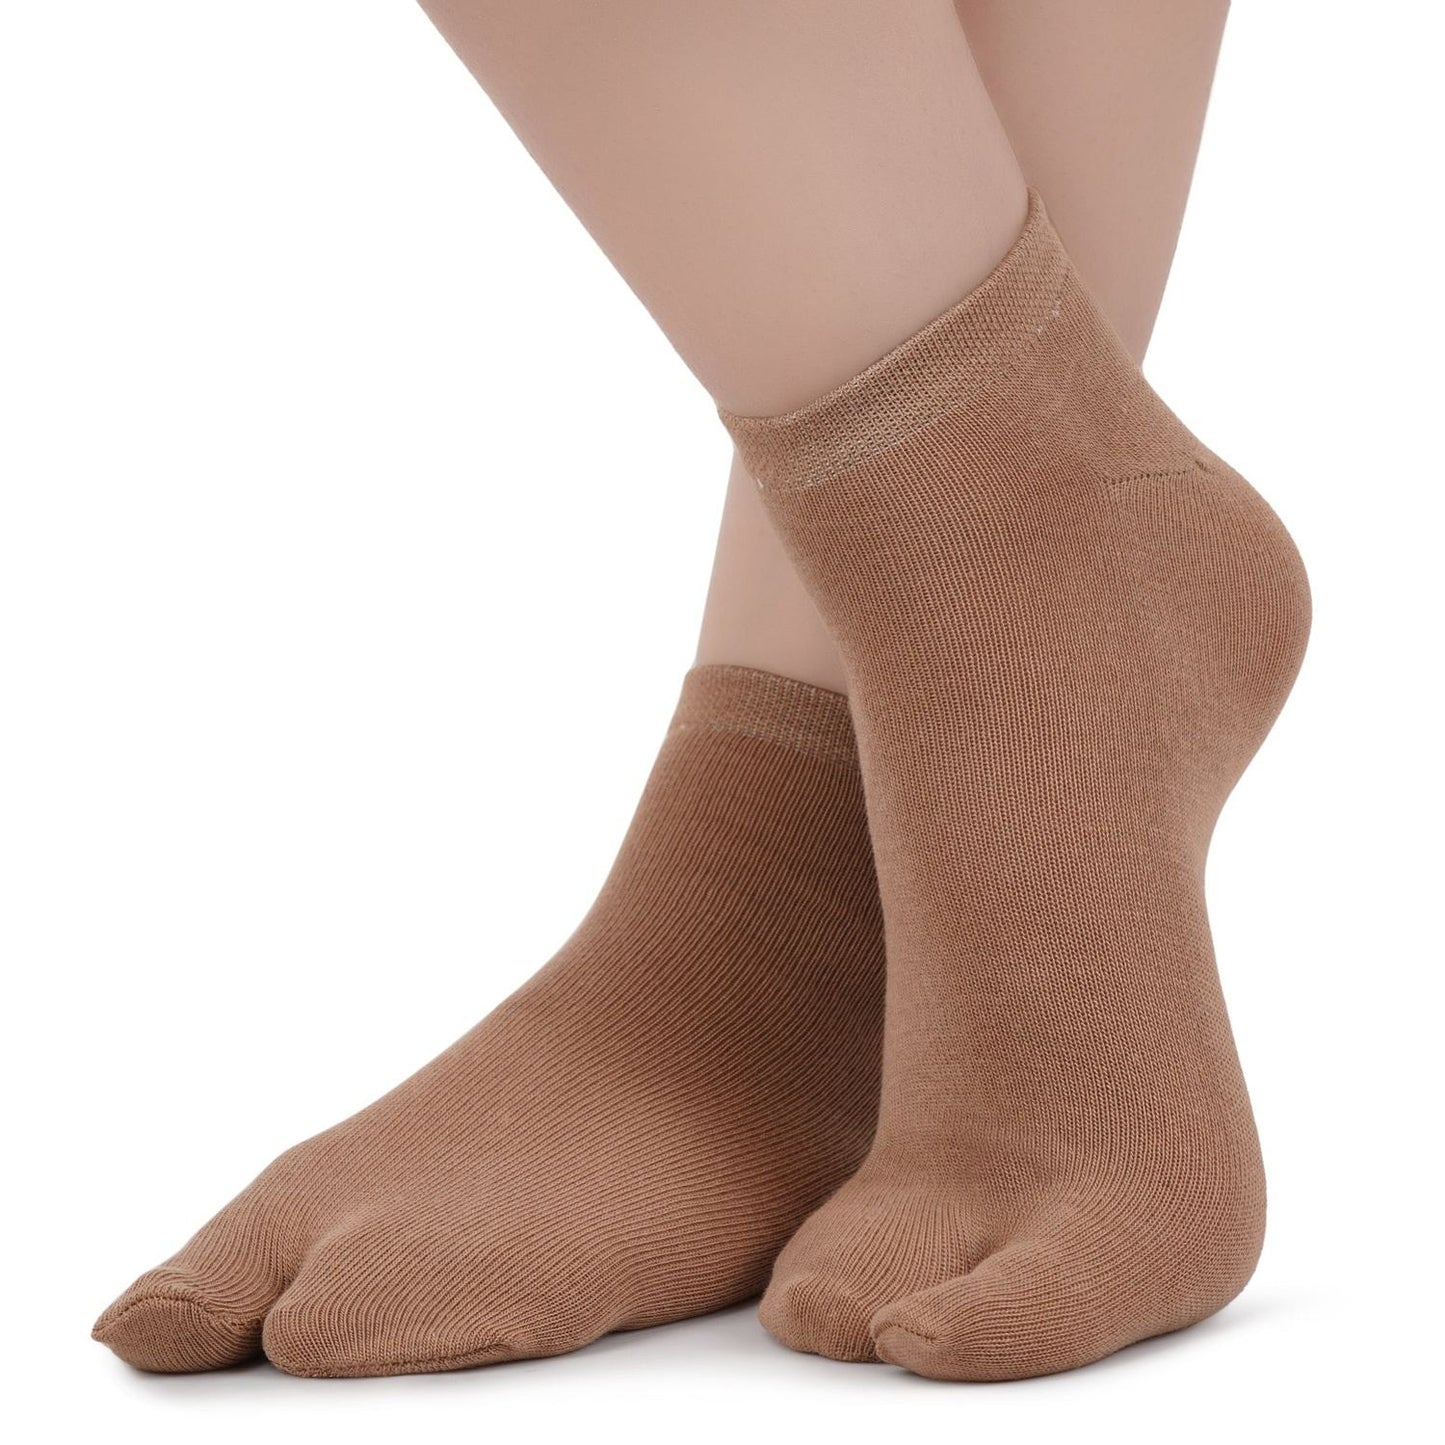 Low Ankle Length Thumb Socks - Dark Skin/Fawn